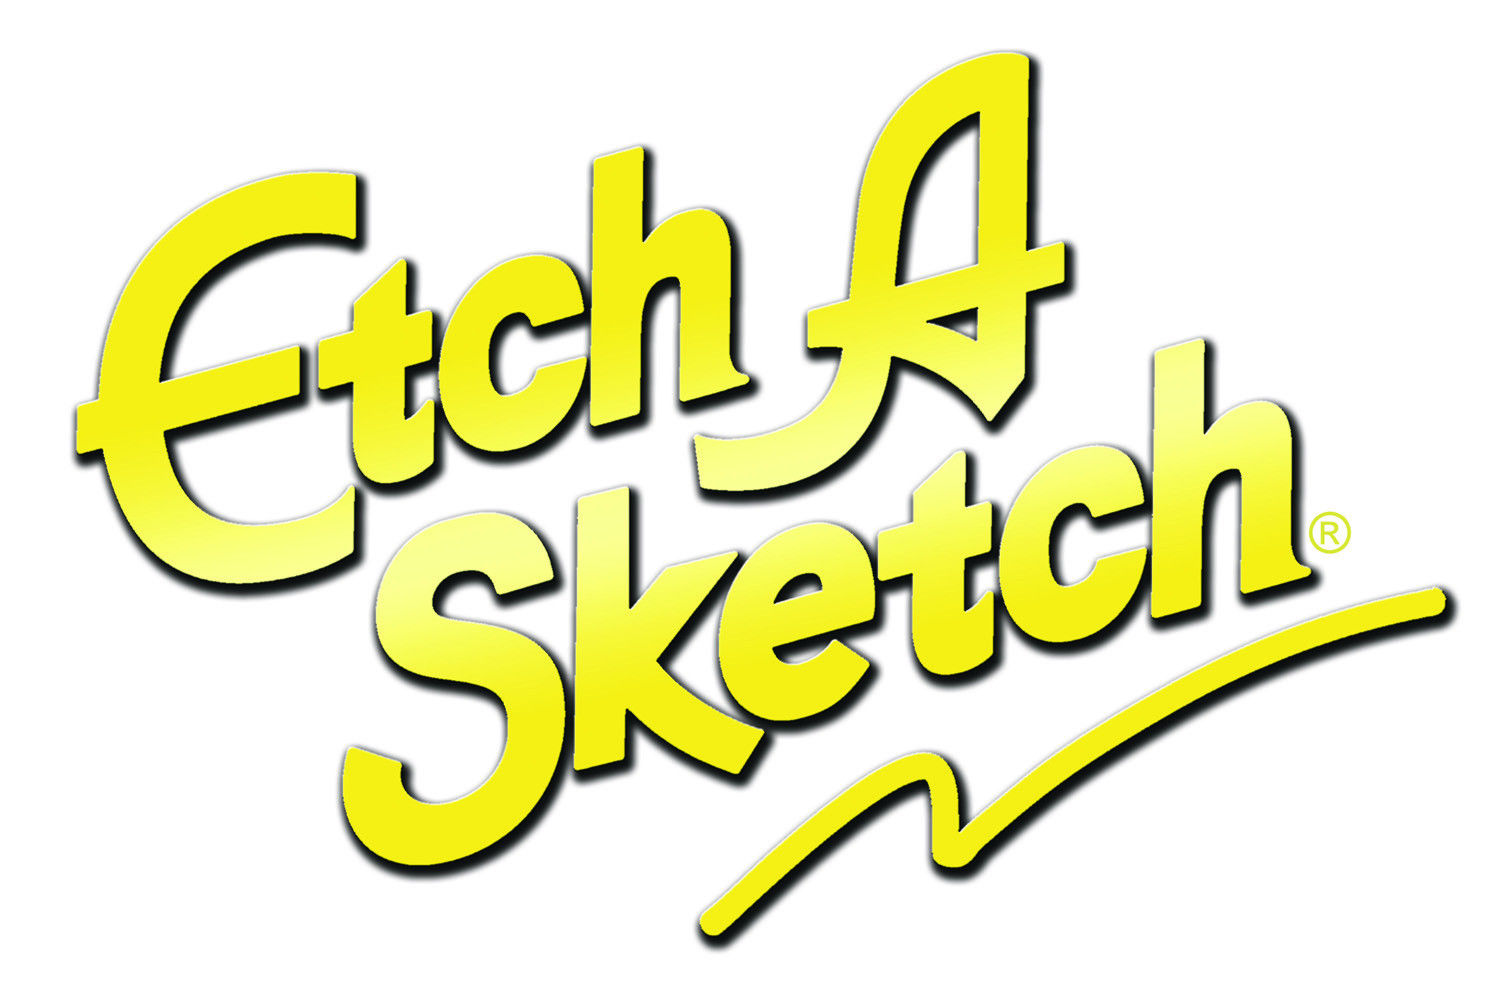 Sketch Logos